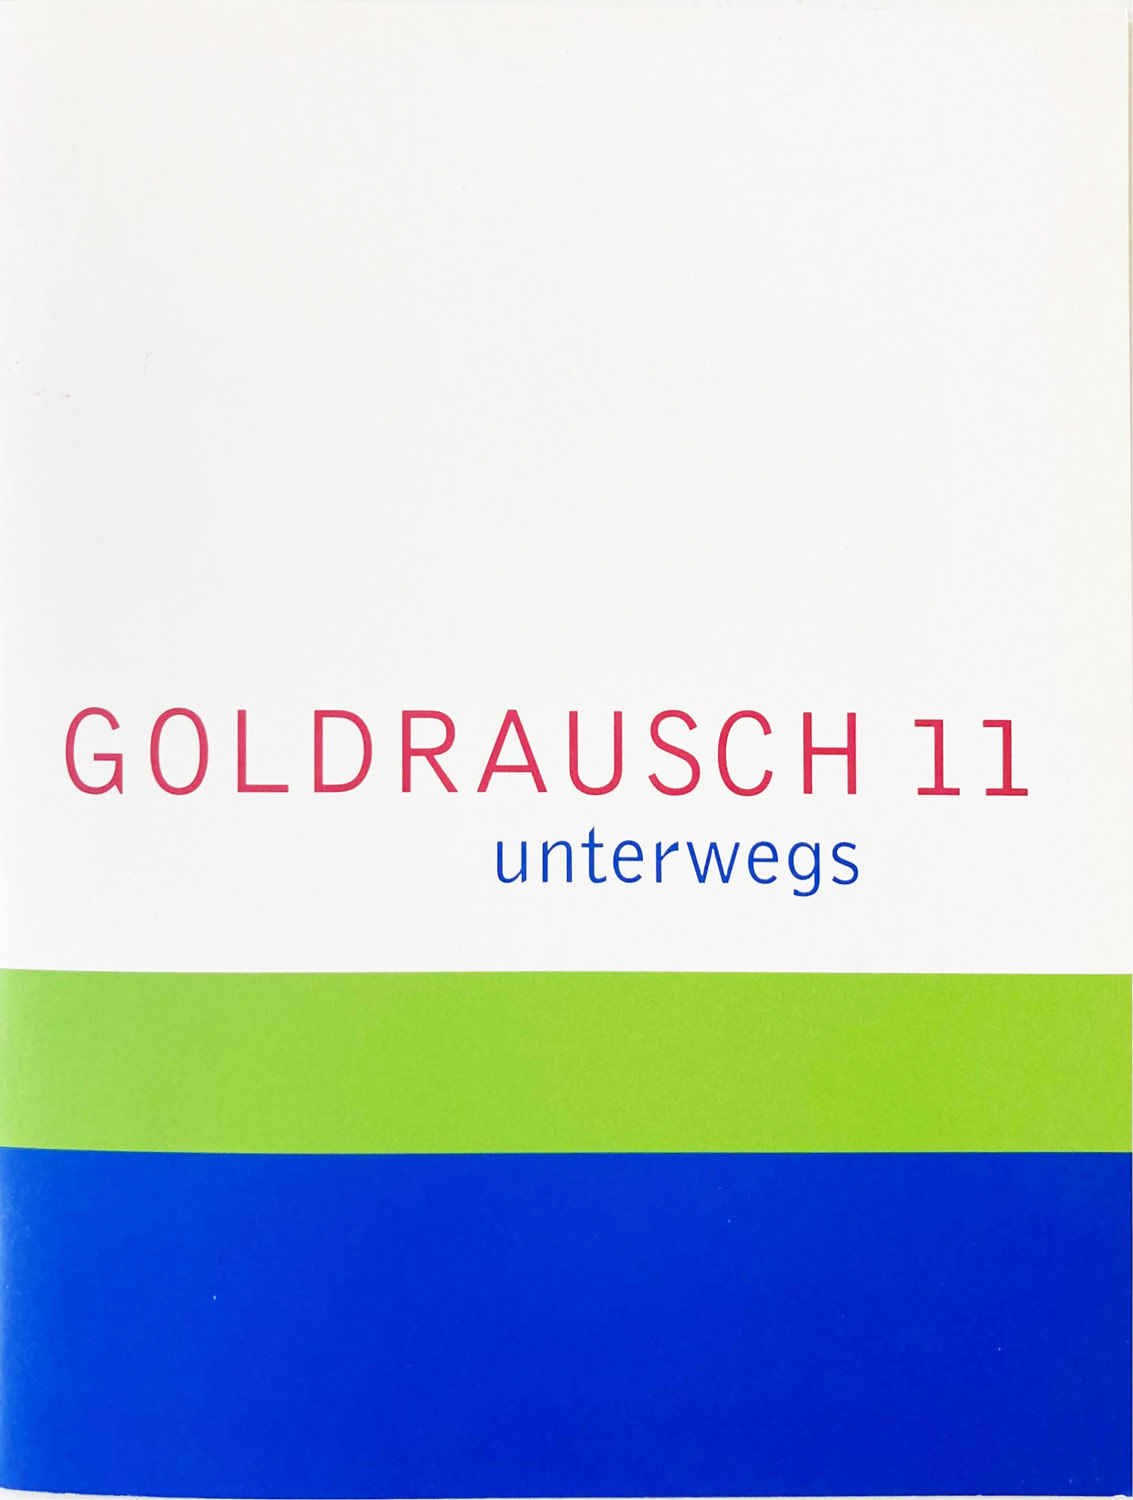 Jubiläum Goldrausch 30 Jahre, Katalog 1999/2000